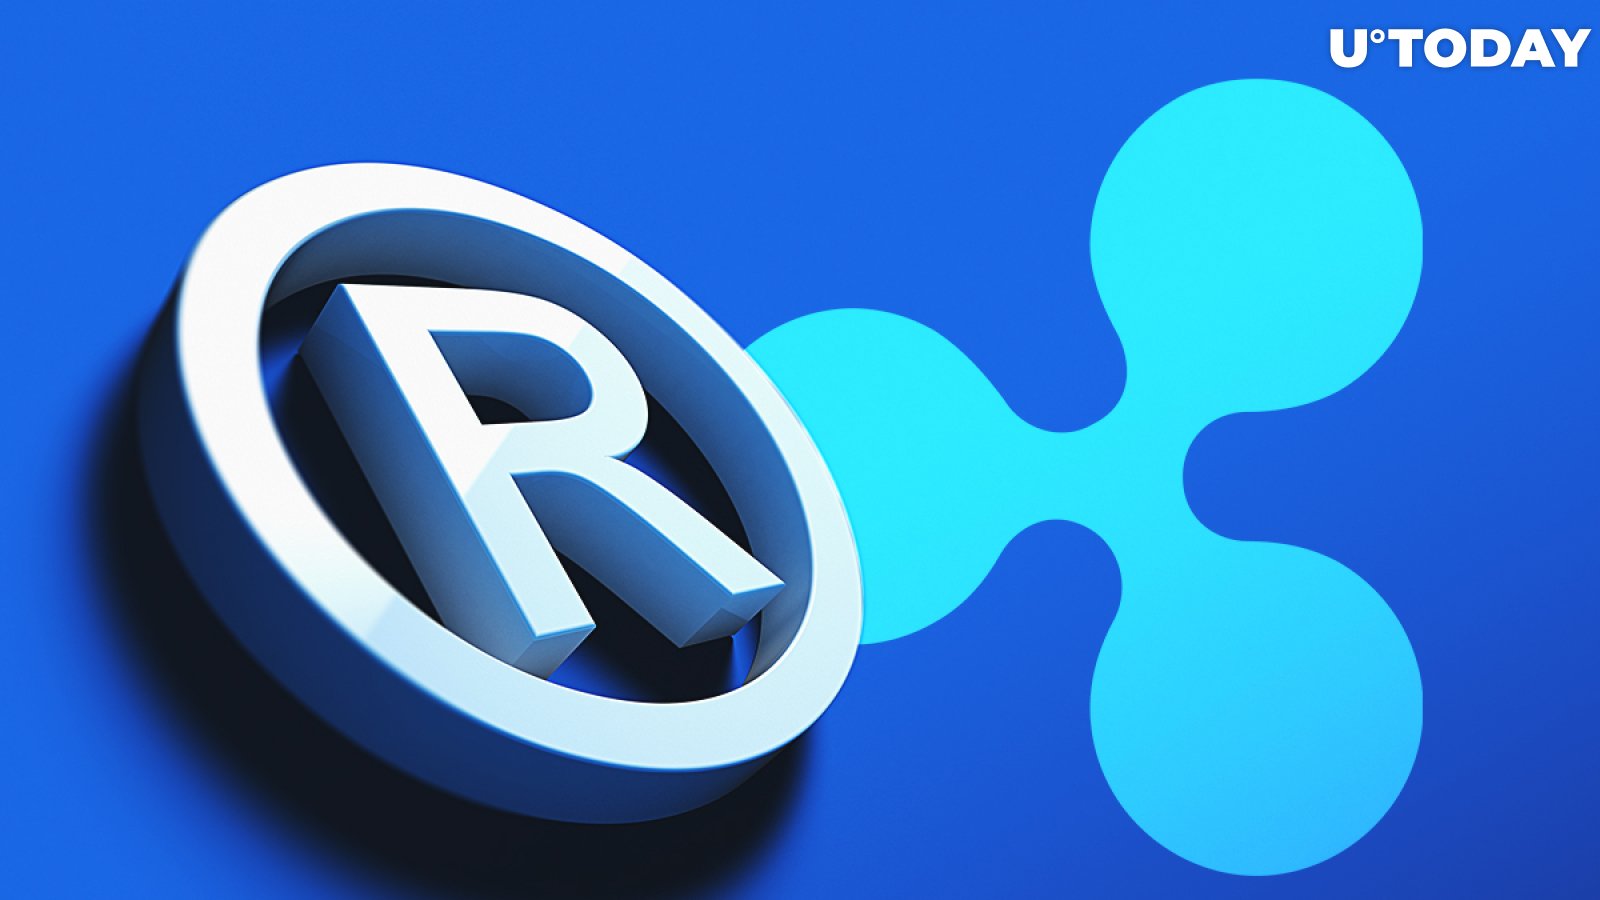 Ripple Registers Brand-New Trademark Applications: Details